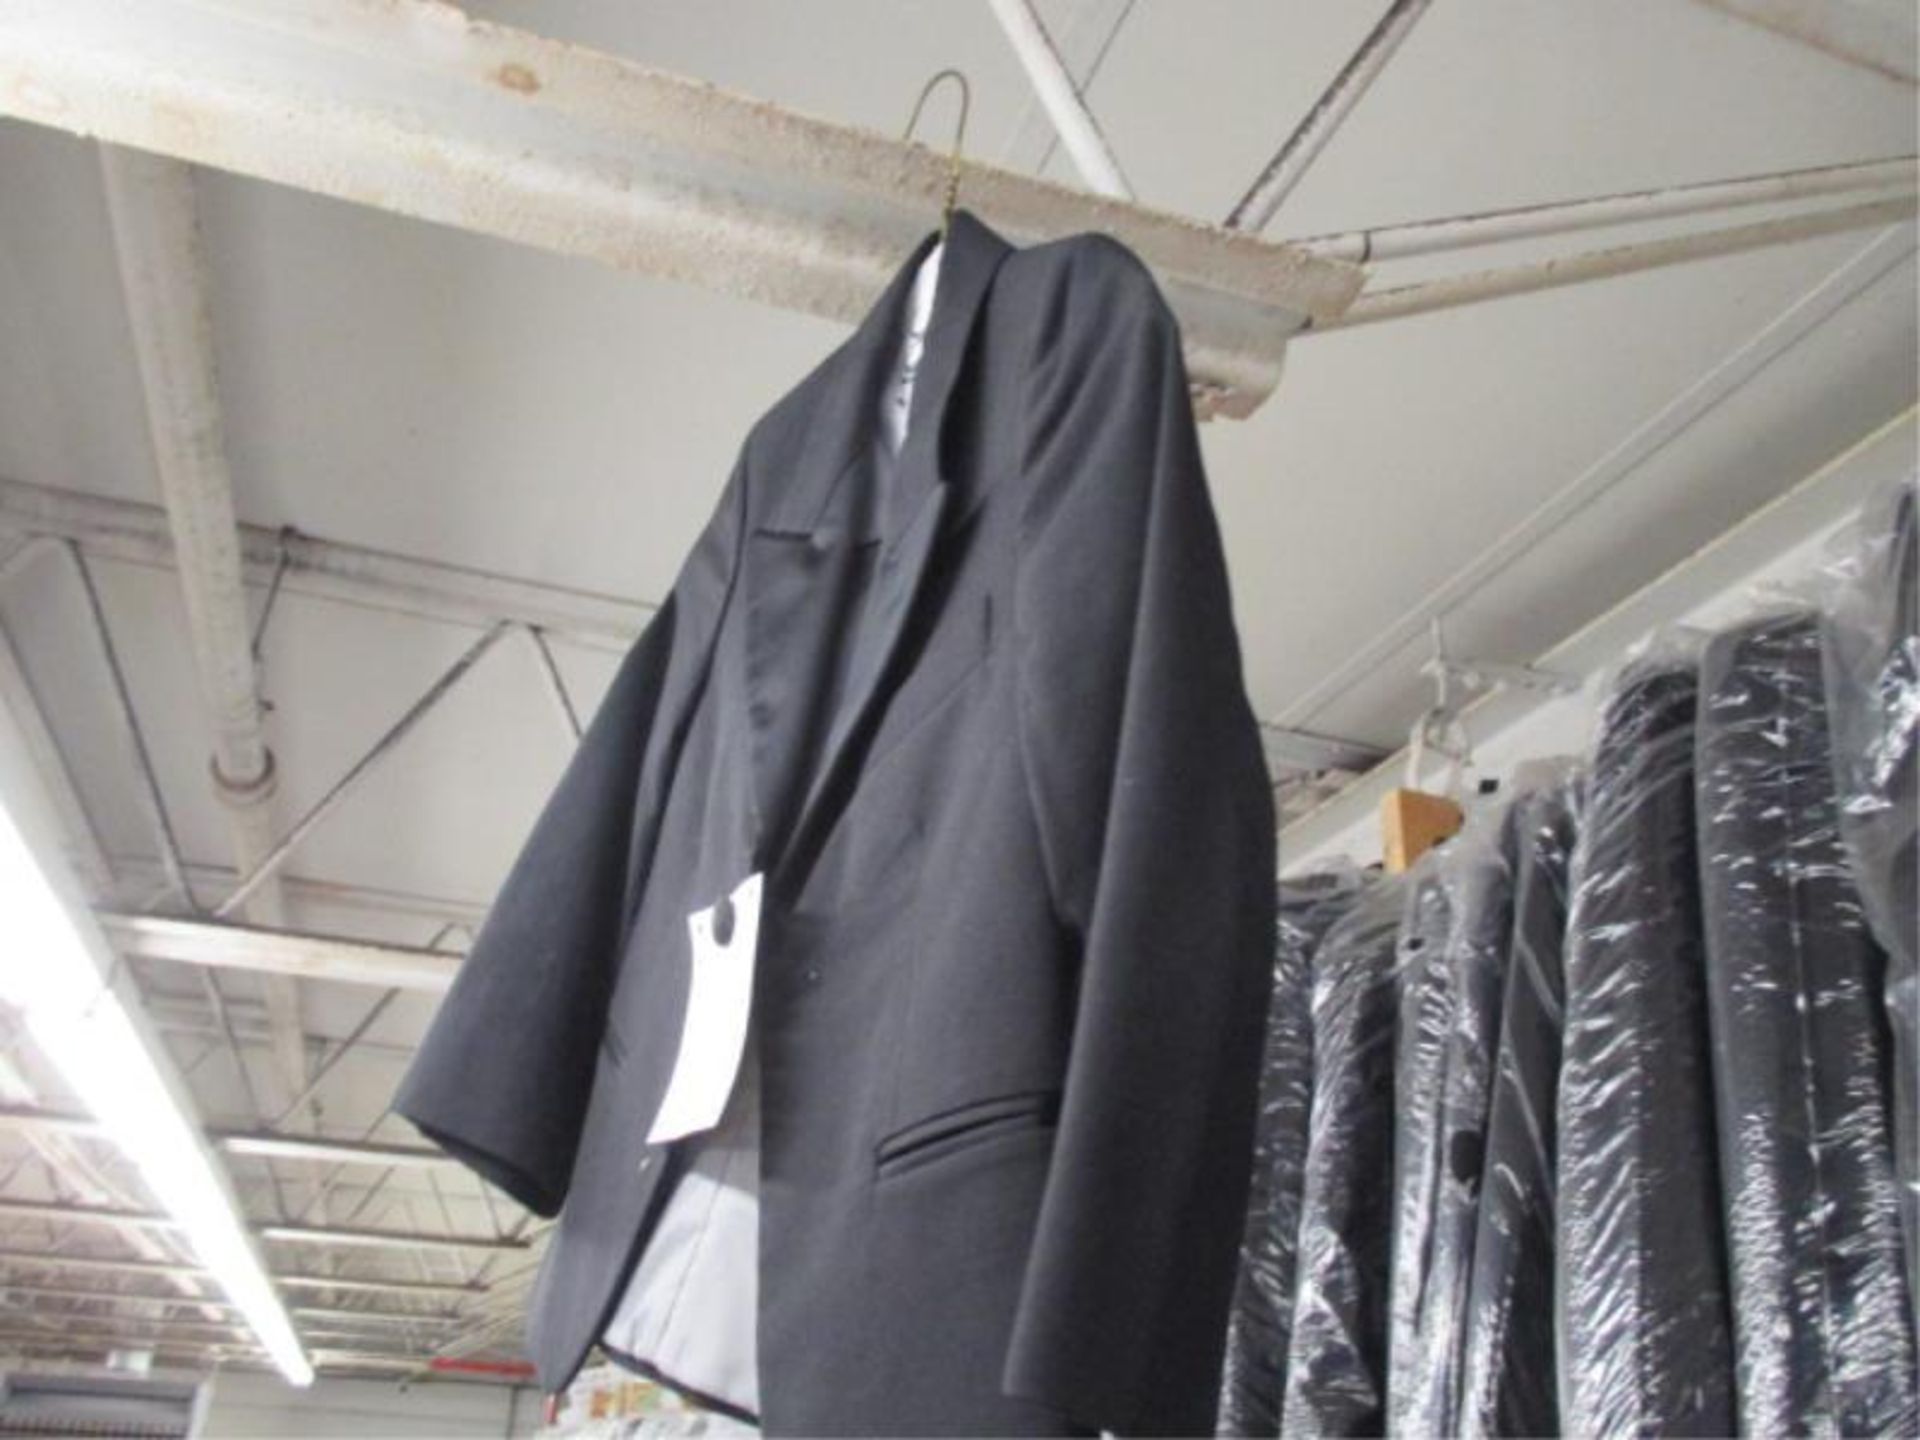 Lot Rental Mens Tux Jackets, Black, White, Dual Color, Etc, Approx. 1000 - Image 3 of 25